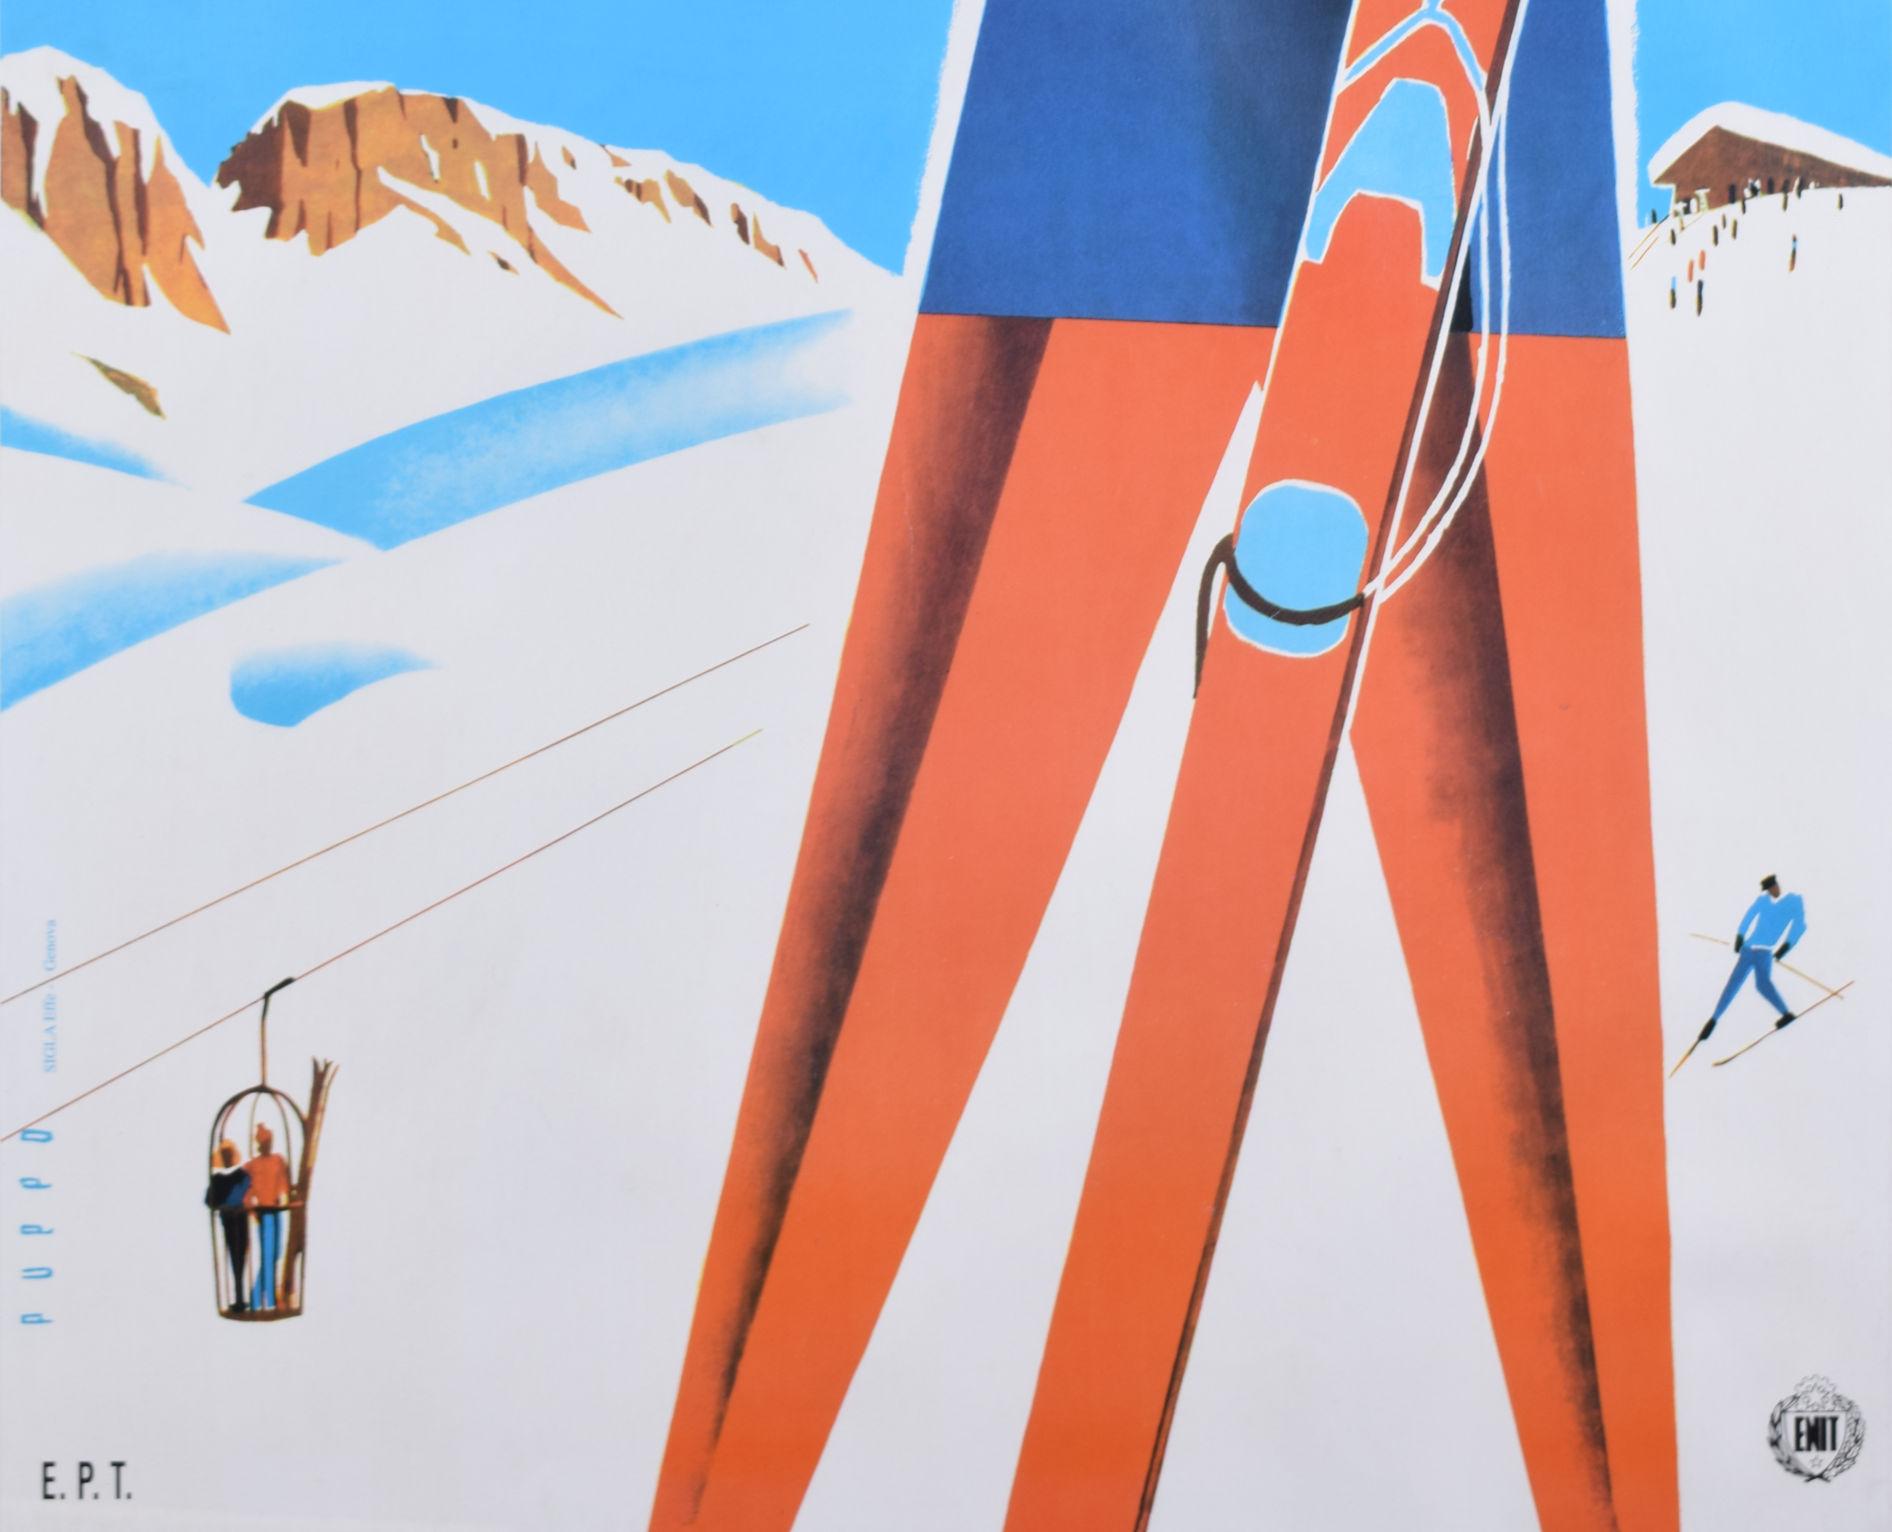 Santo Stefano d'Aveto original vintage Italian ski poster by Mario Puppo For Sale 1